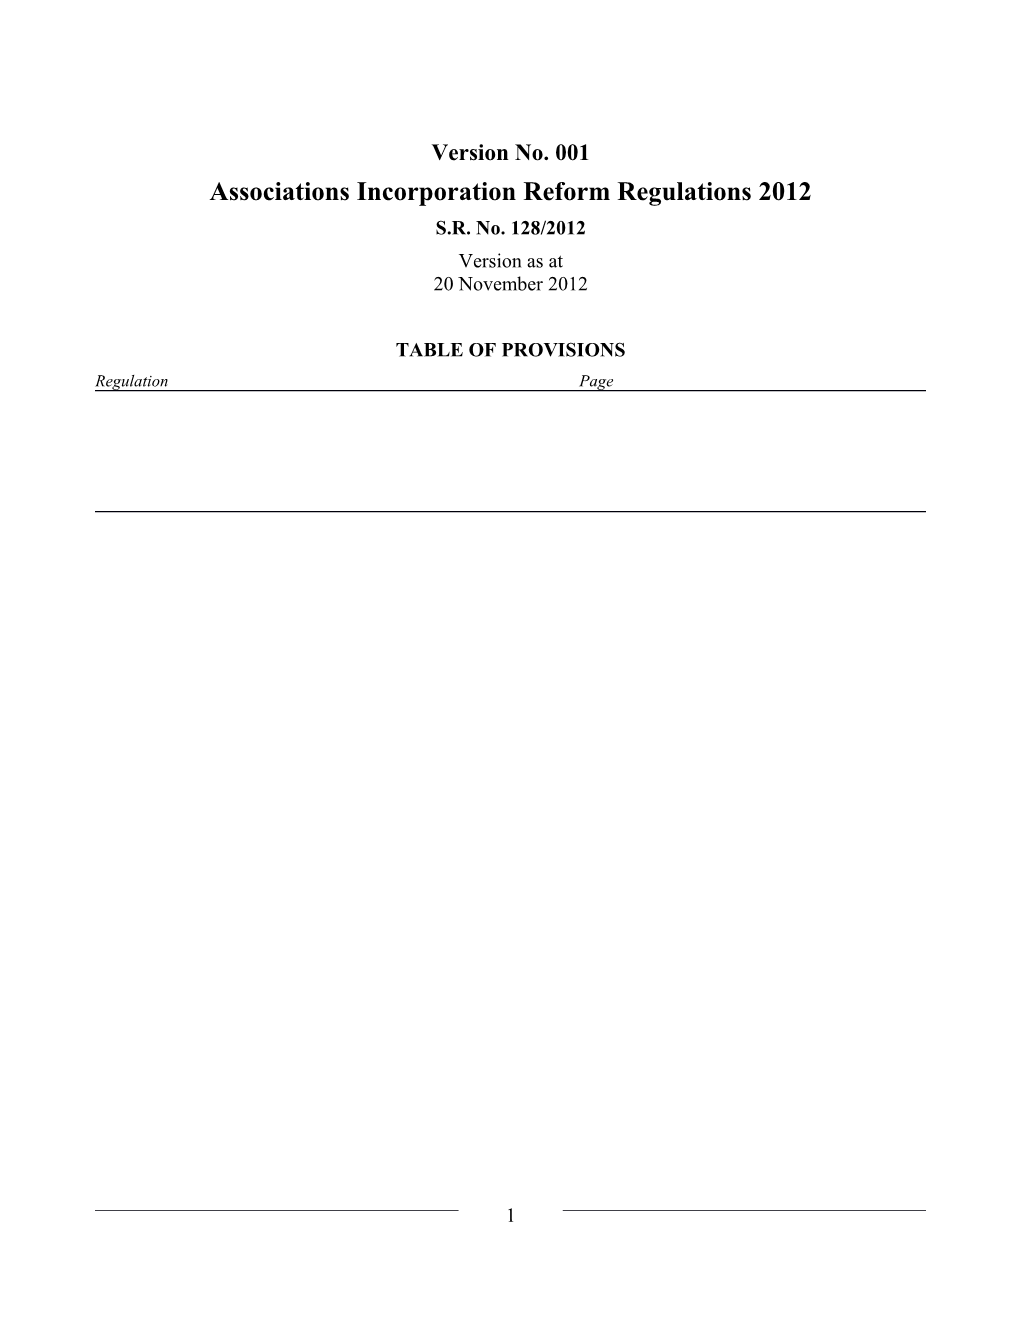 Associations Incorporation Reform Regulations 2012